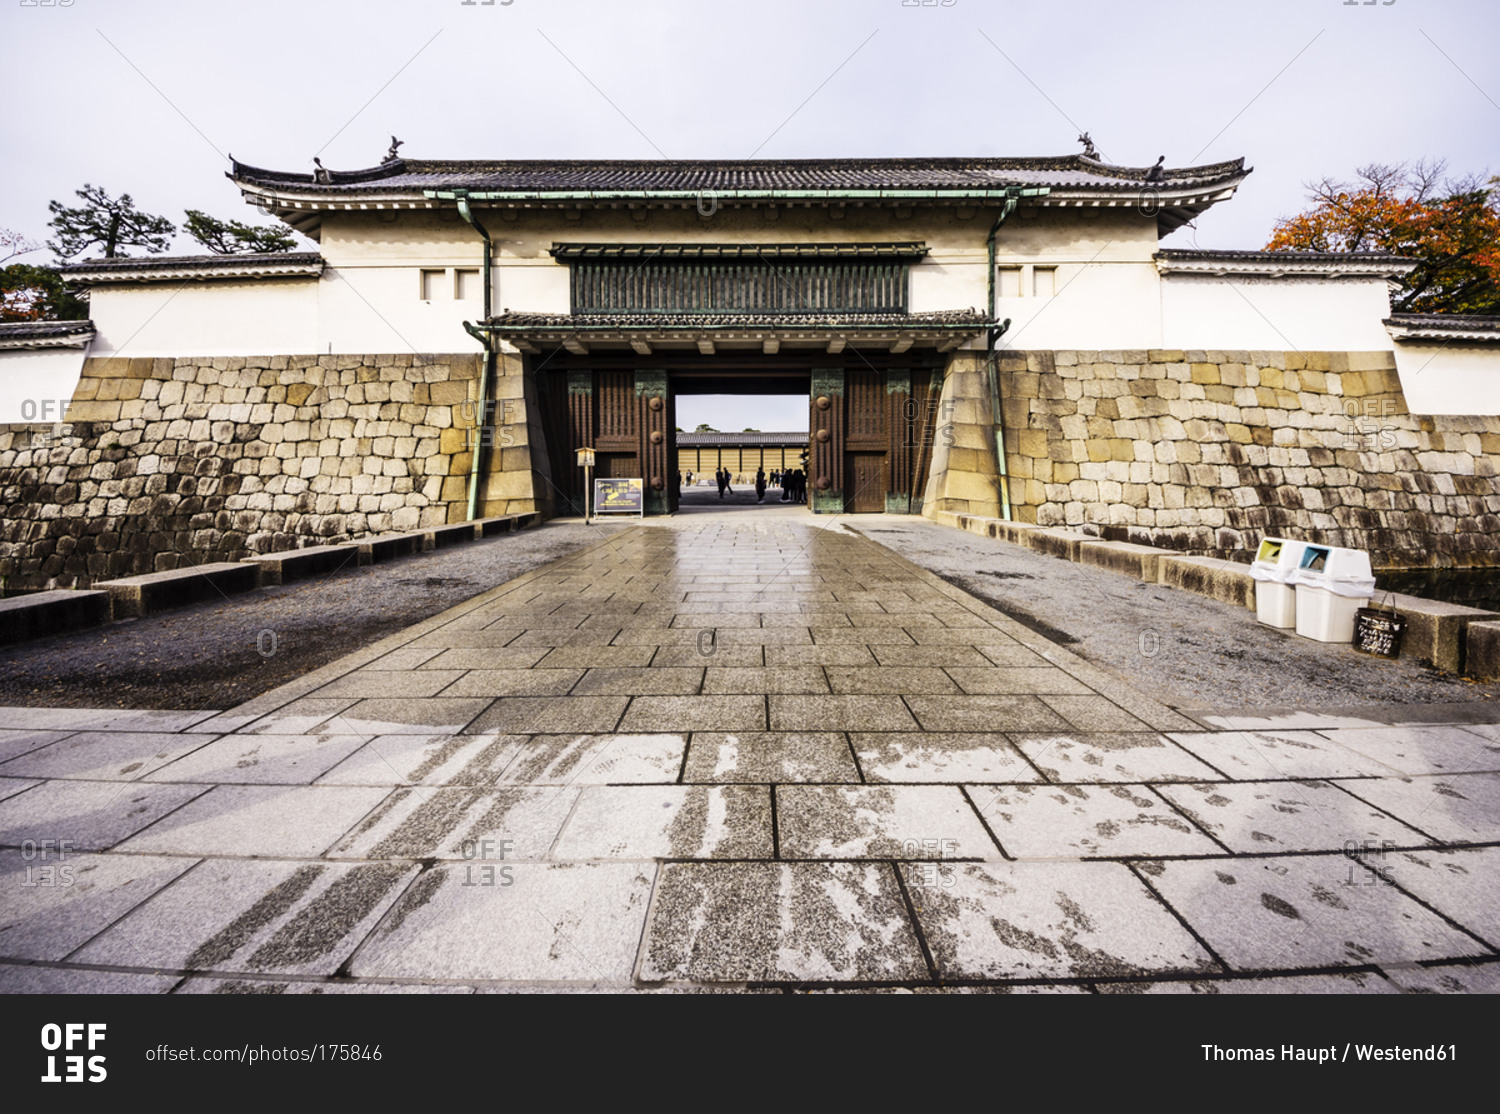 Entrance gate, Nijo Castle, Kyoto, Japan